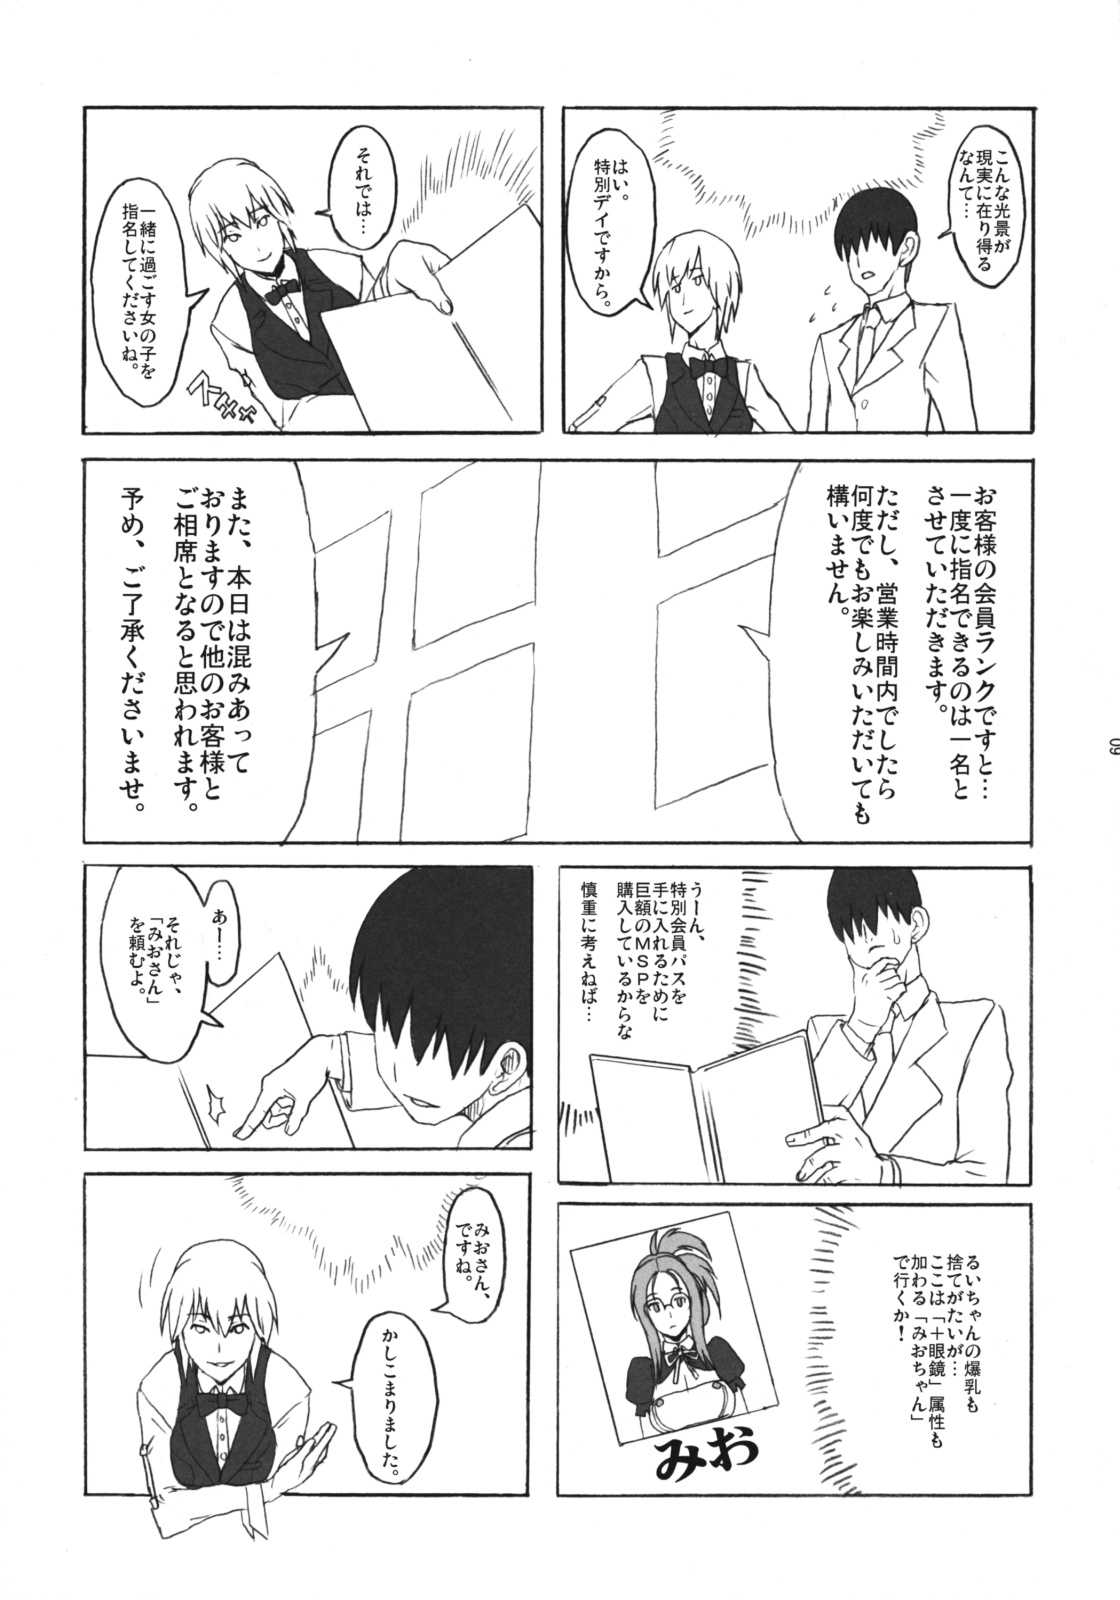 (C76) [VARIABLE? (Yukiguni Eringi)] Dream Shower Club (Dream C Club) (C76) [VARIABLE? (雪国エリンギ)] ドリームシャワークラブ (Dream C Club)